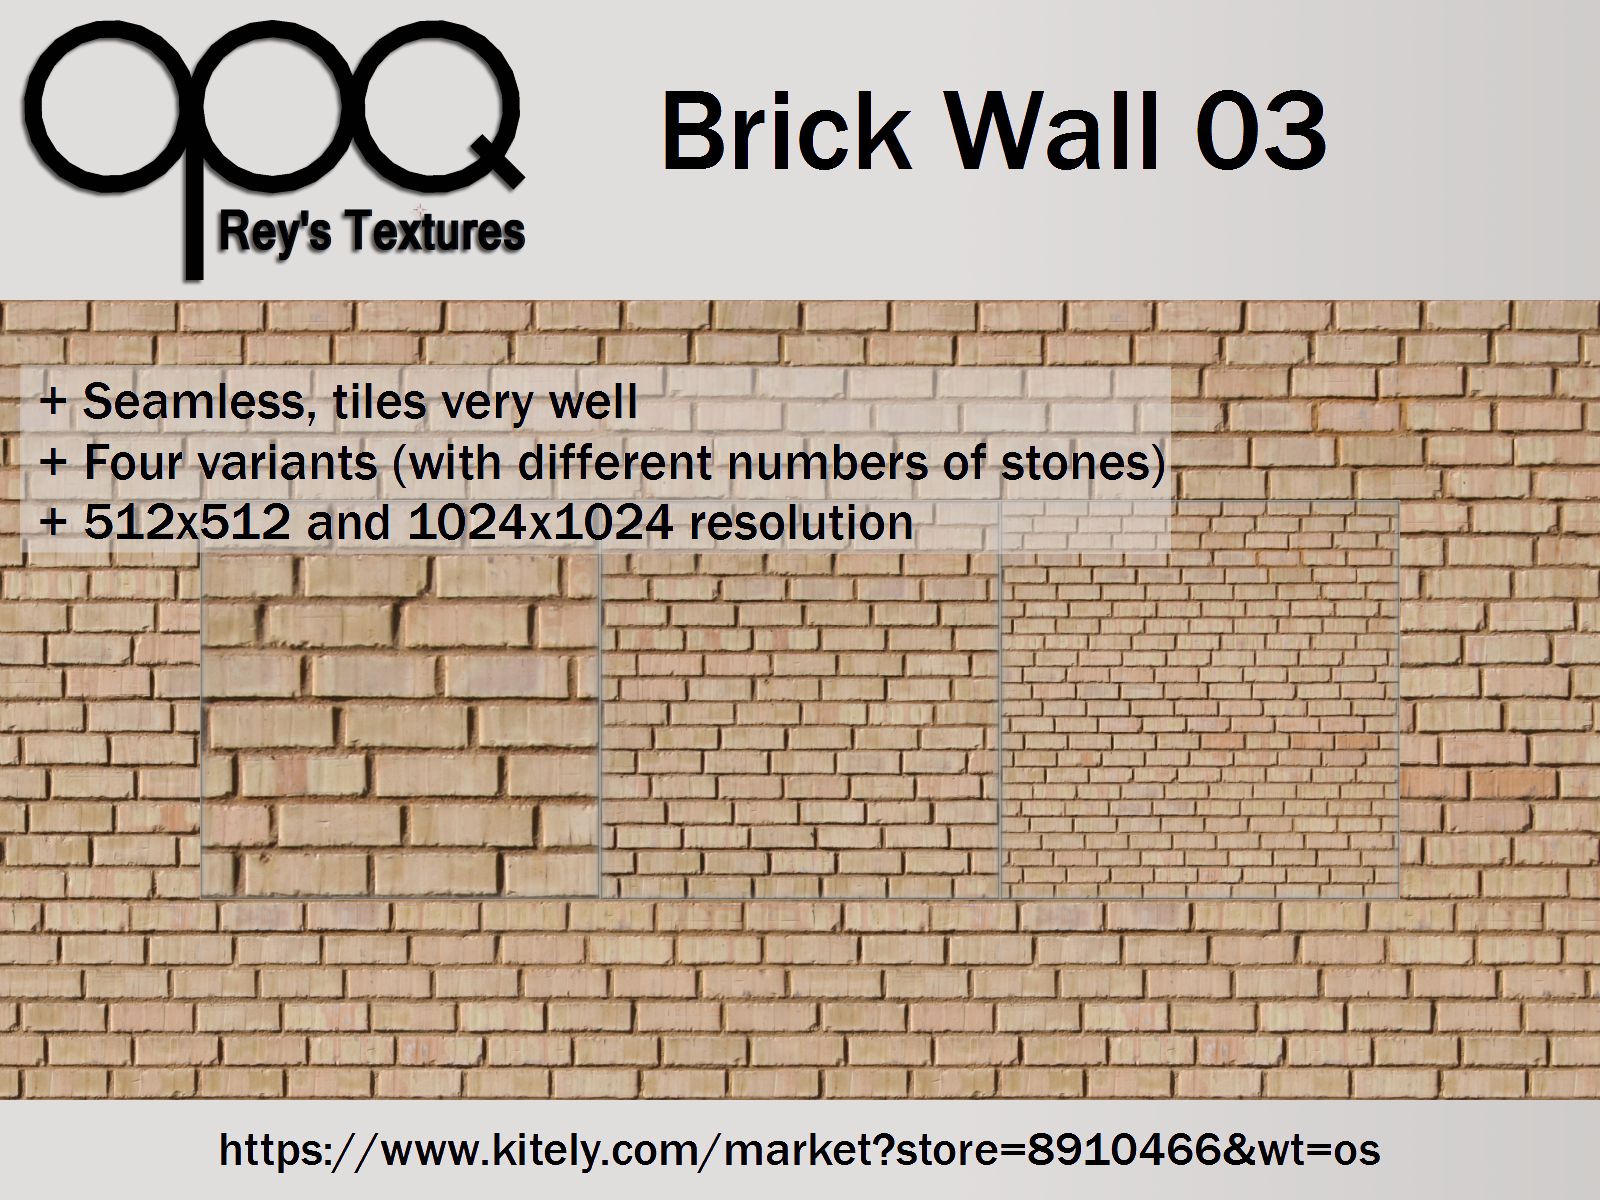 Rey's Brick Wall 03 Poster Kitely.jpg